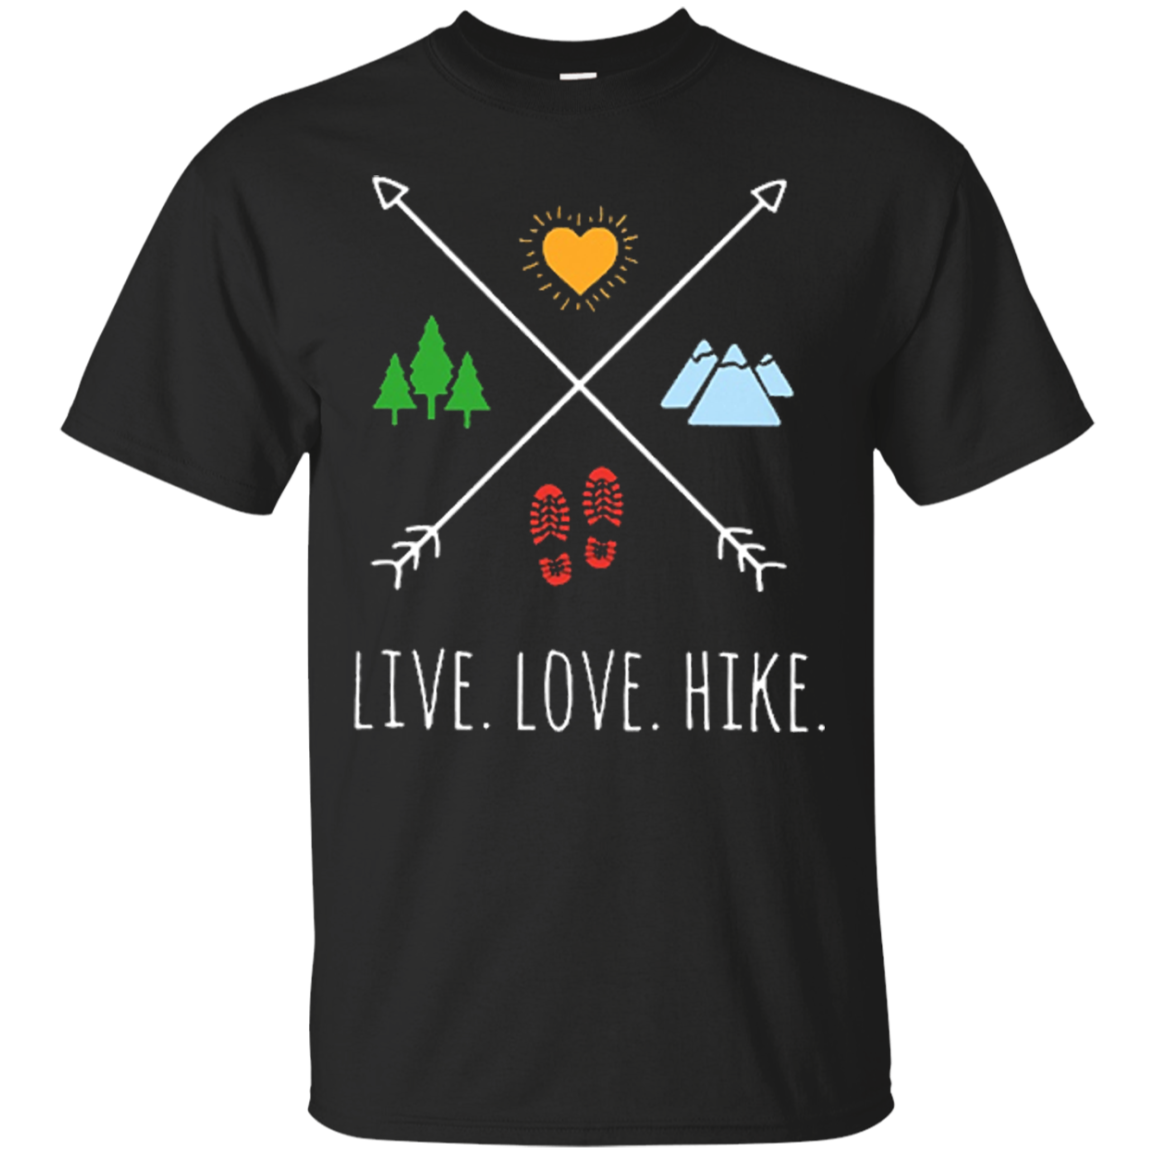 Live-love-hike-t-shirt